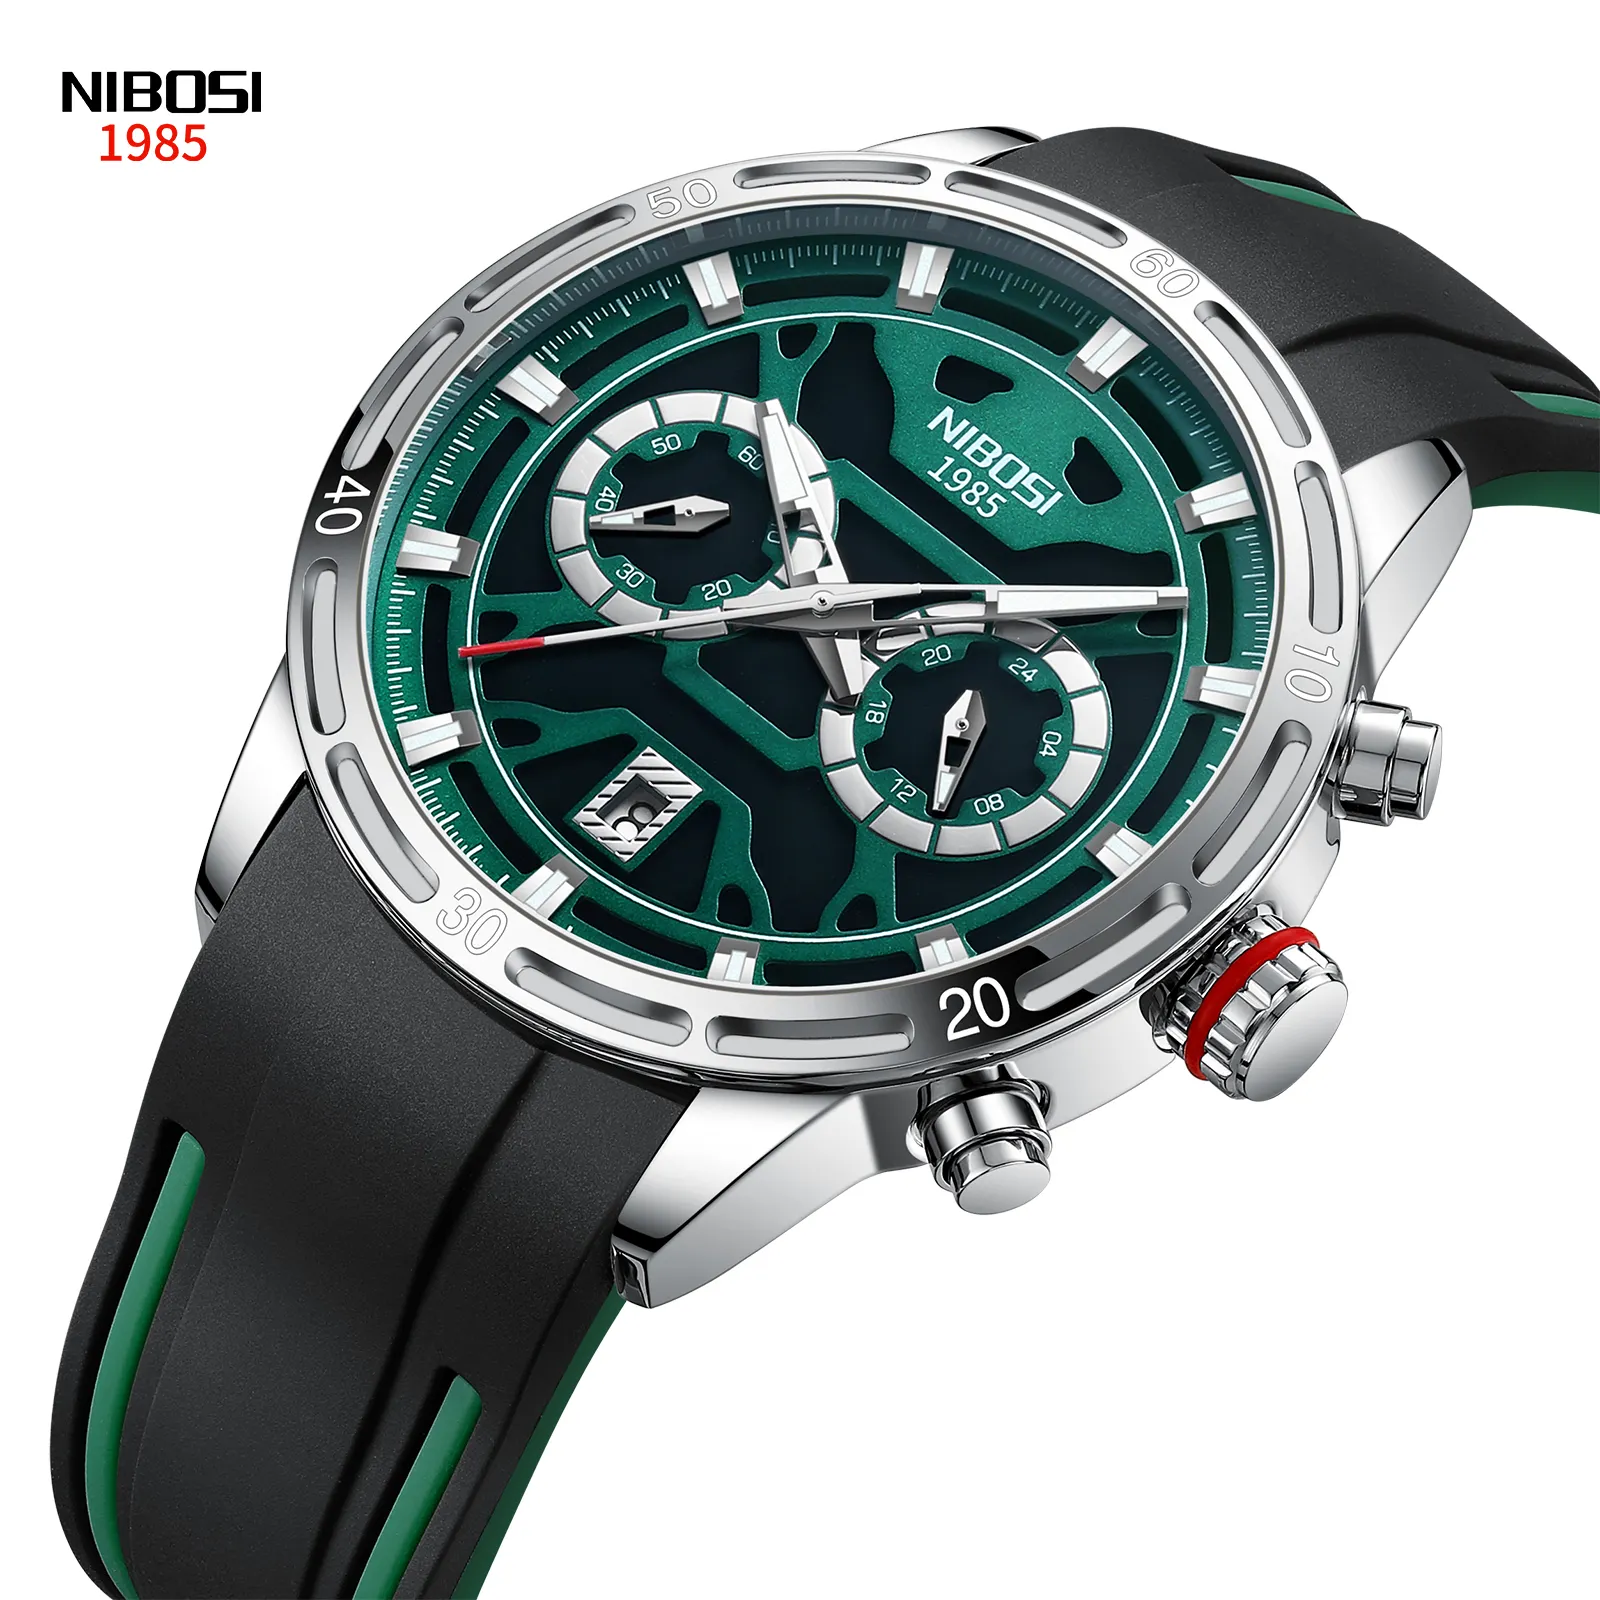 Top Brand Nibosi Original Watch Supplier New Arrival 2537 Silicone Rubber Strap Multifunctional Quartz Wristwatches for men